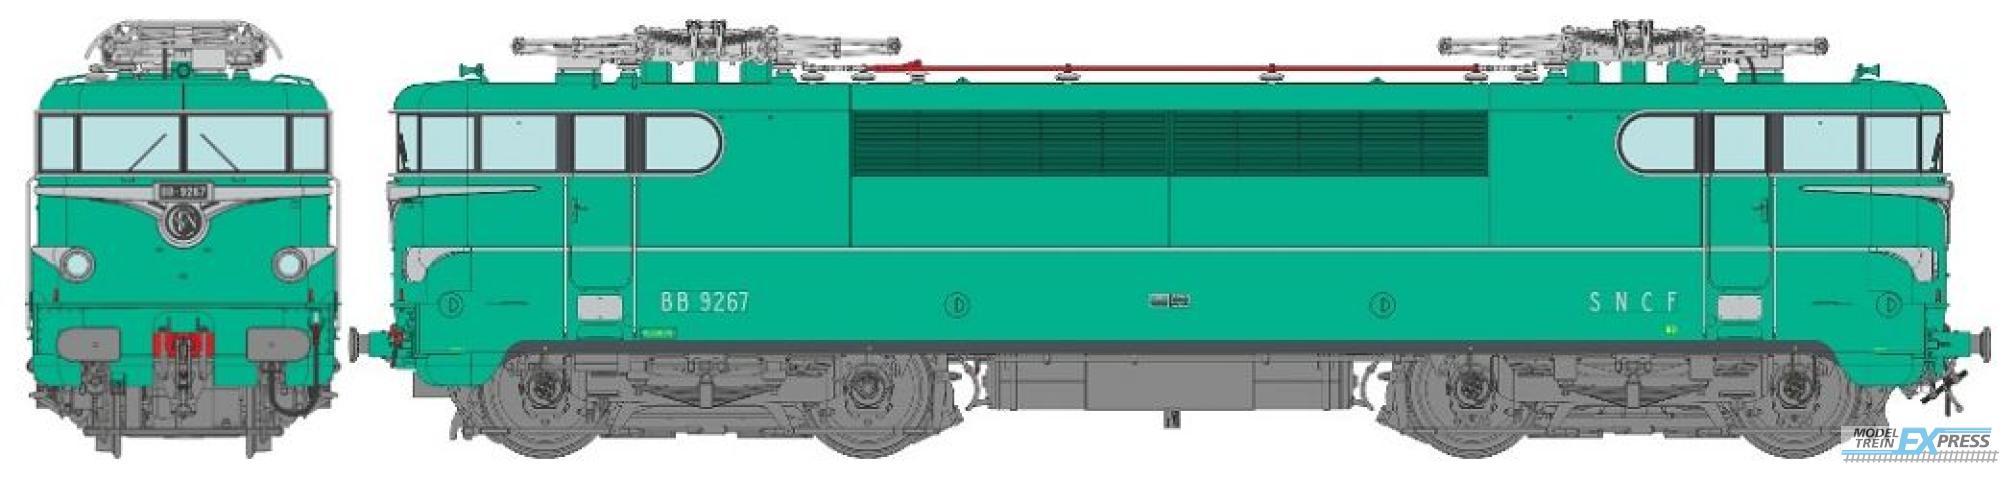 REE models MB-081S BB 9267 Origin Green, Lyon-Mouche, Plate MISTRAL, Era III - DCC Sound Functional Pantos